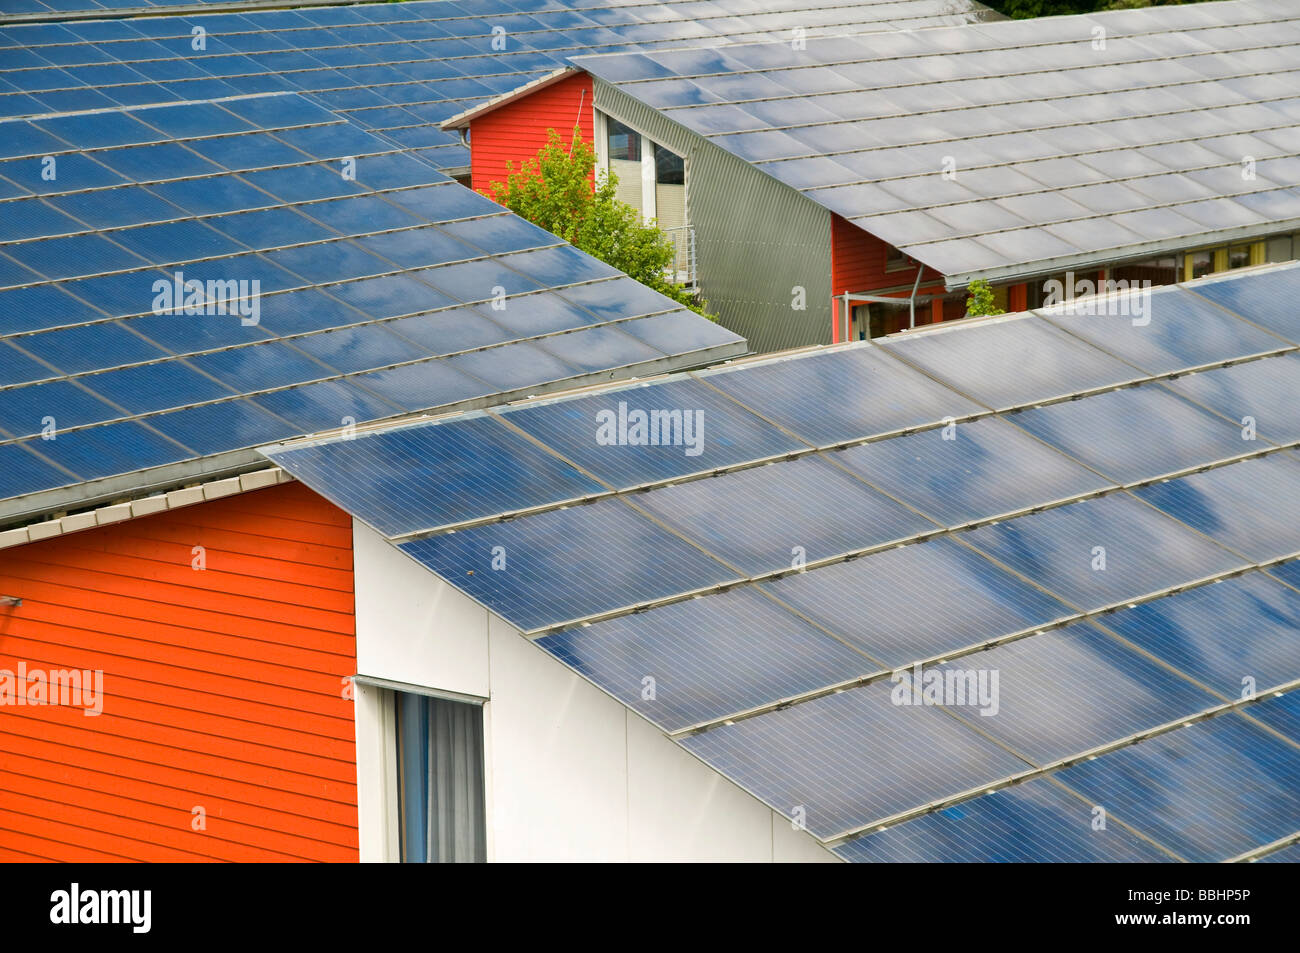 Solar roofs of the Solarsiedlung solar settlement, Vauban, Freiburg, Baden-Wuerttemberg, Germany, Europe Stock Photo